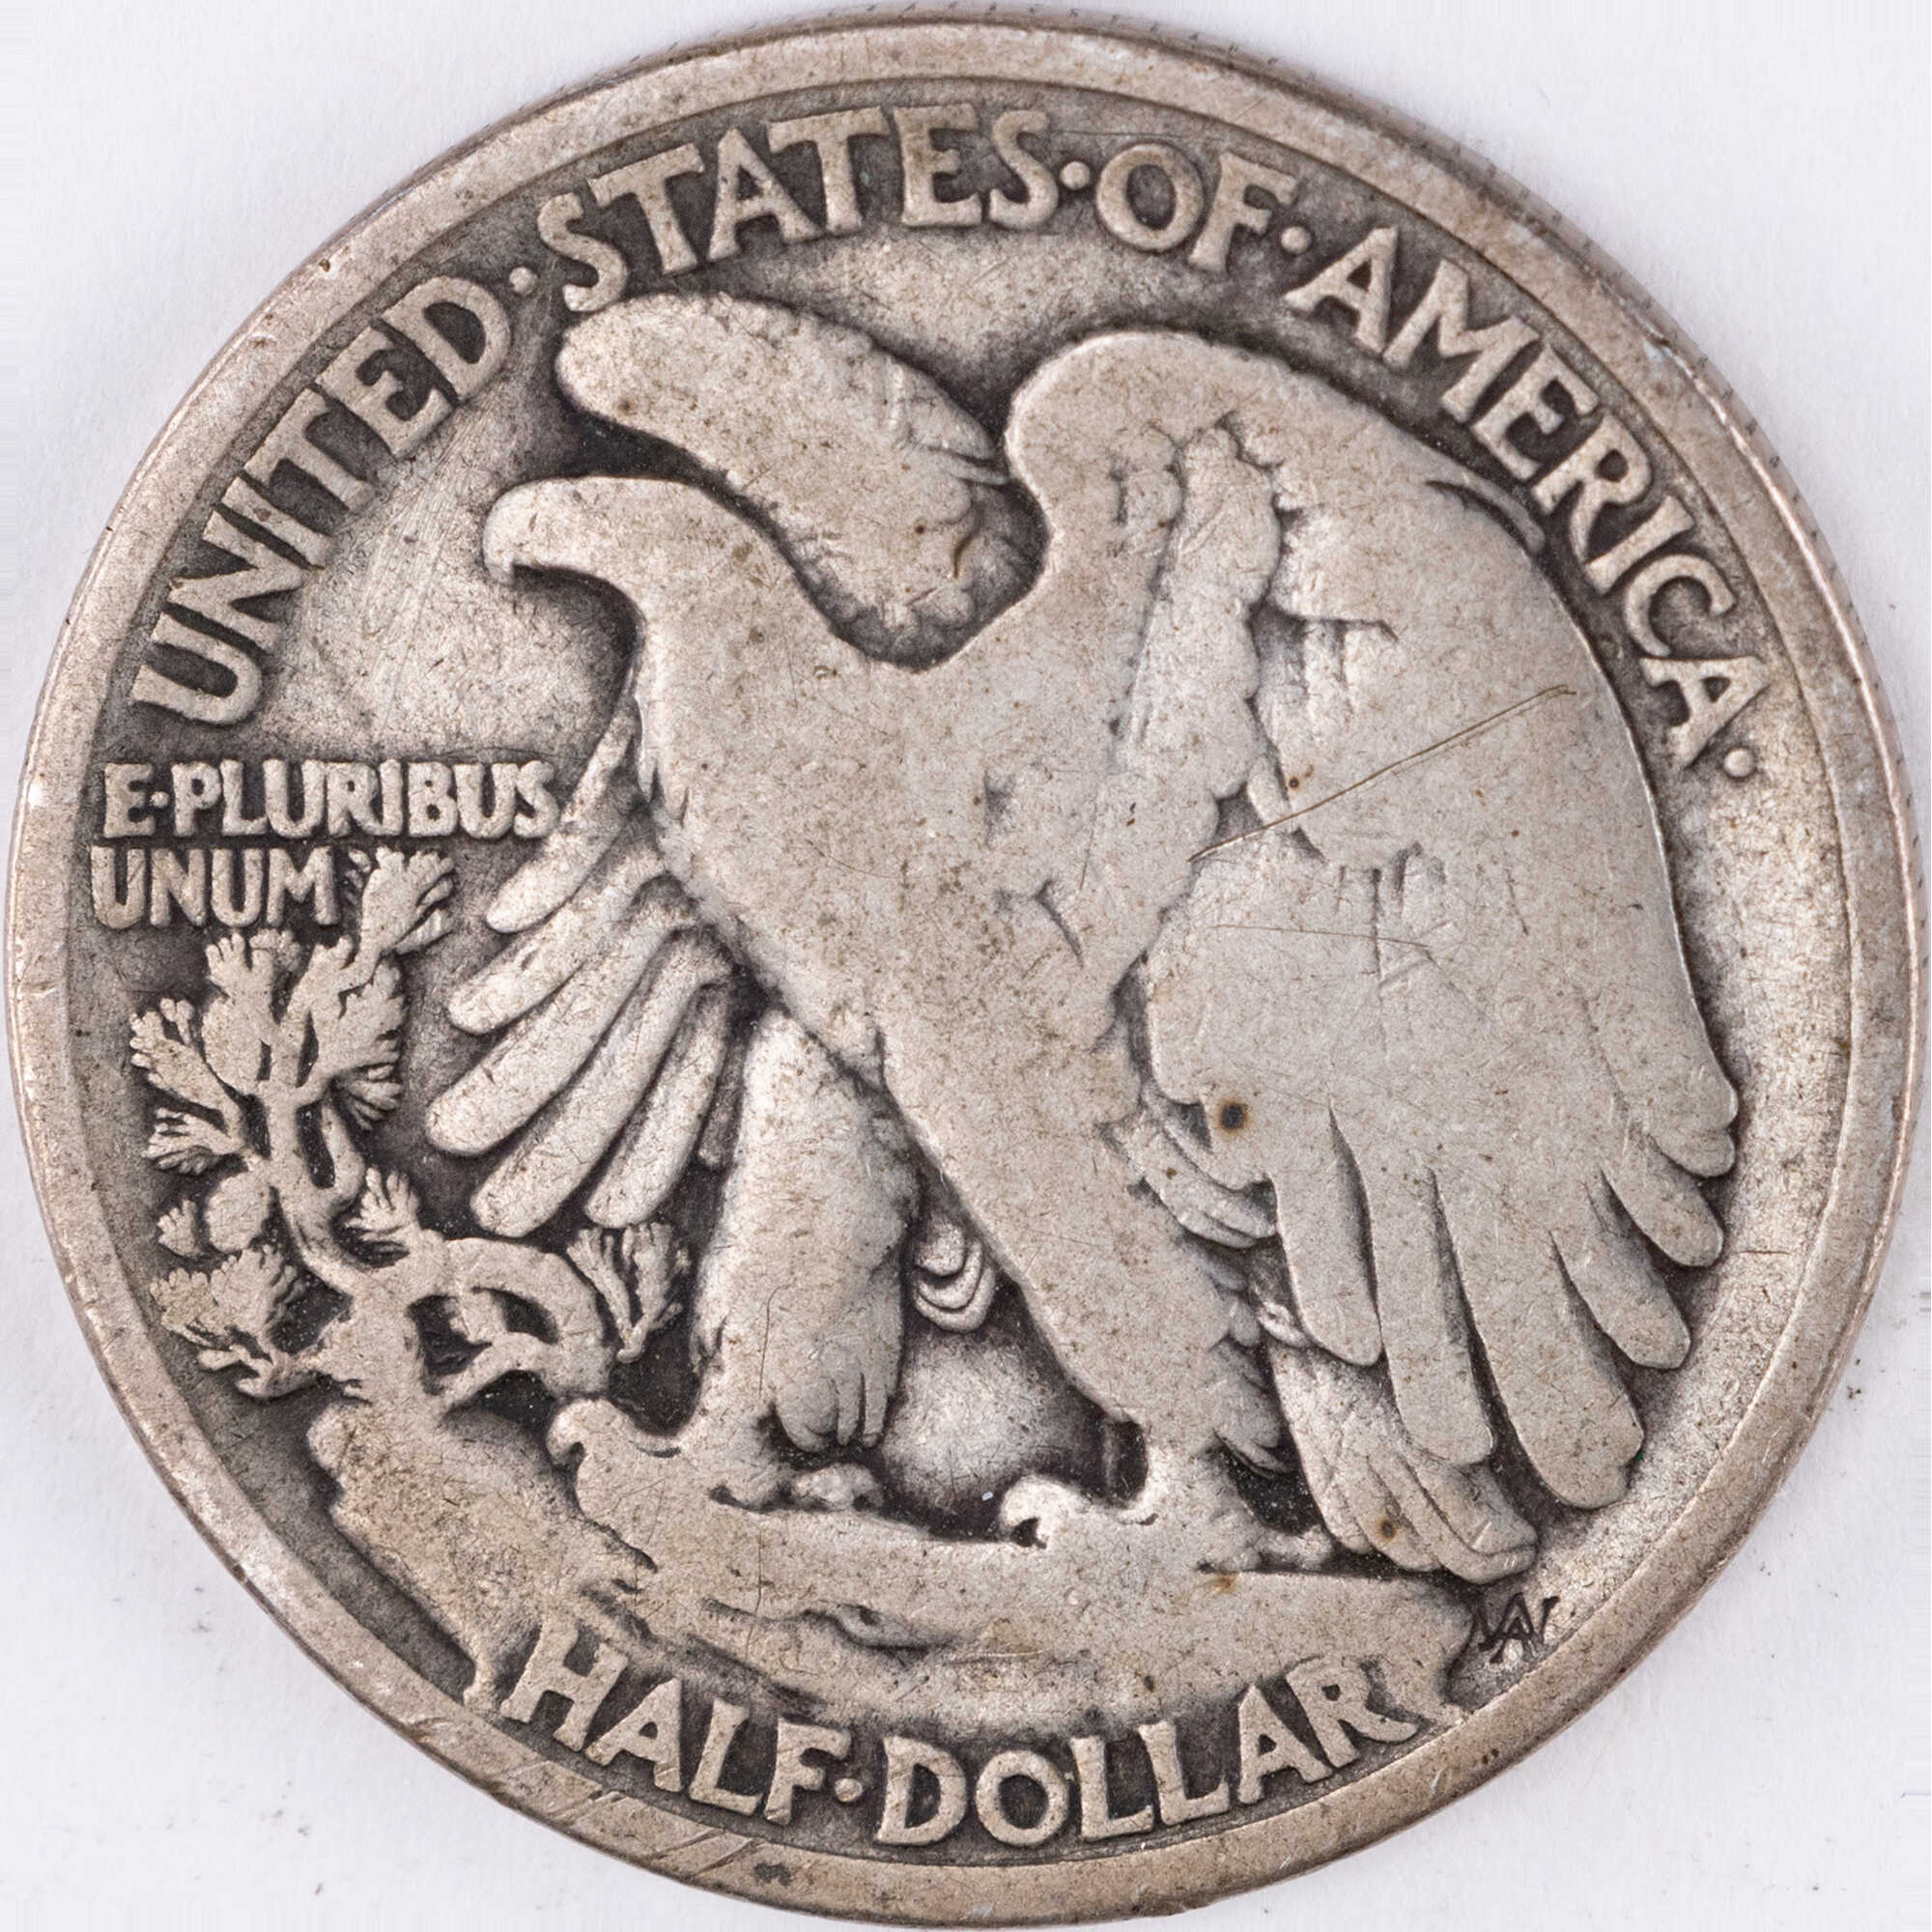 1917 Liberty Walking Half Dollar VG Very Good Silver SKU:CPC12676